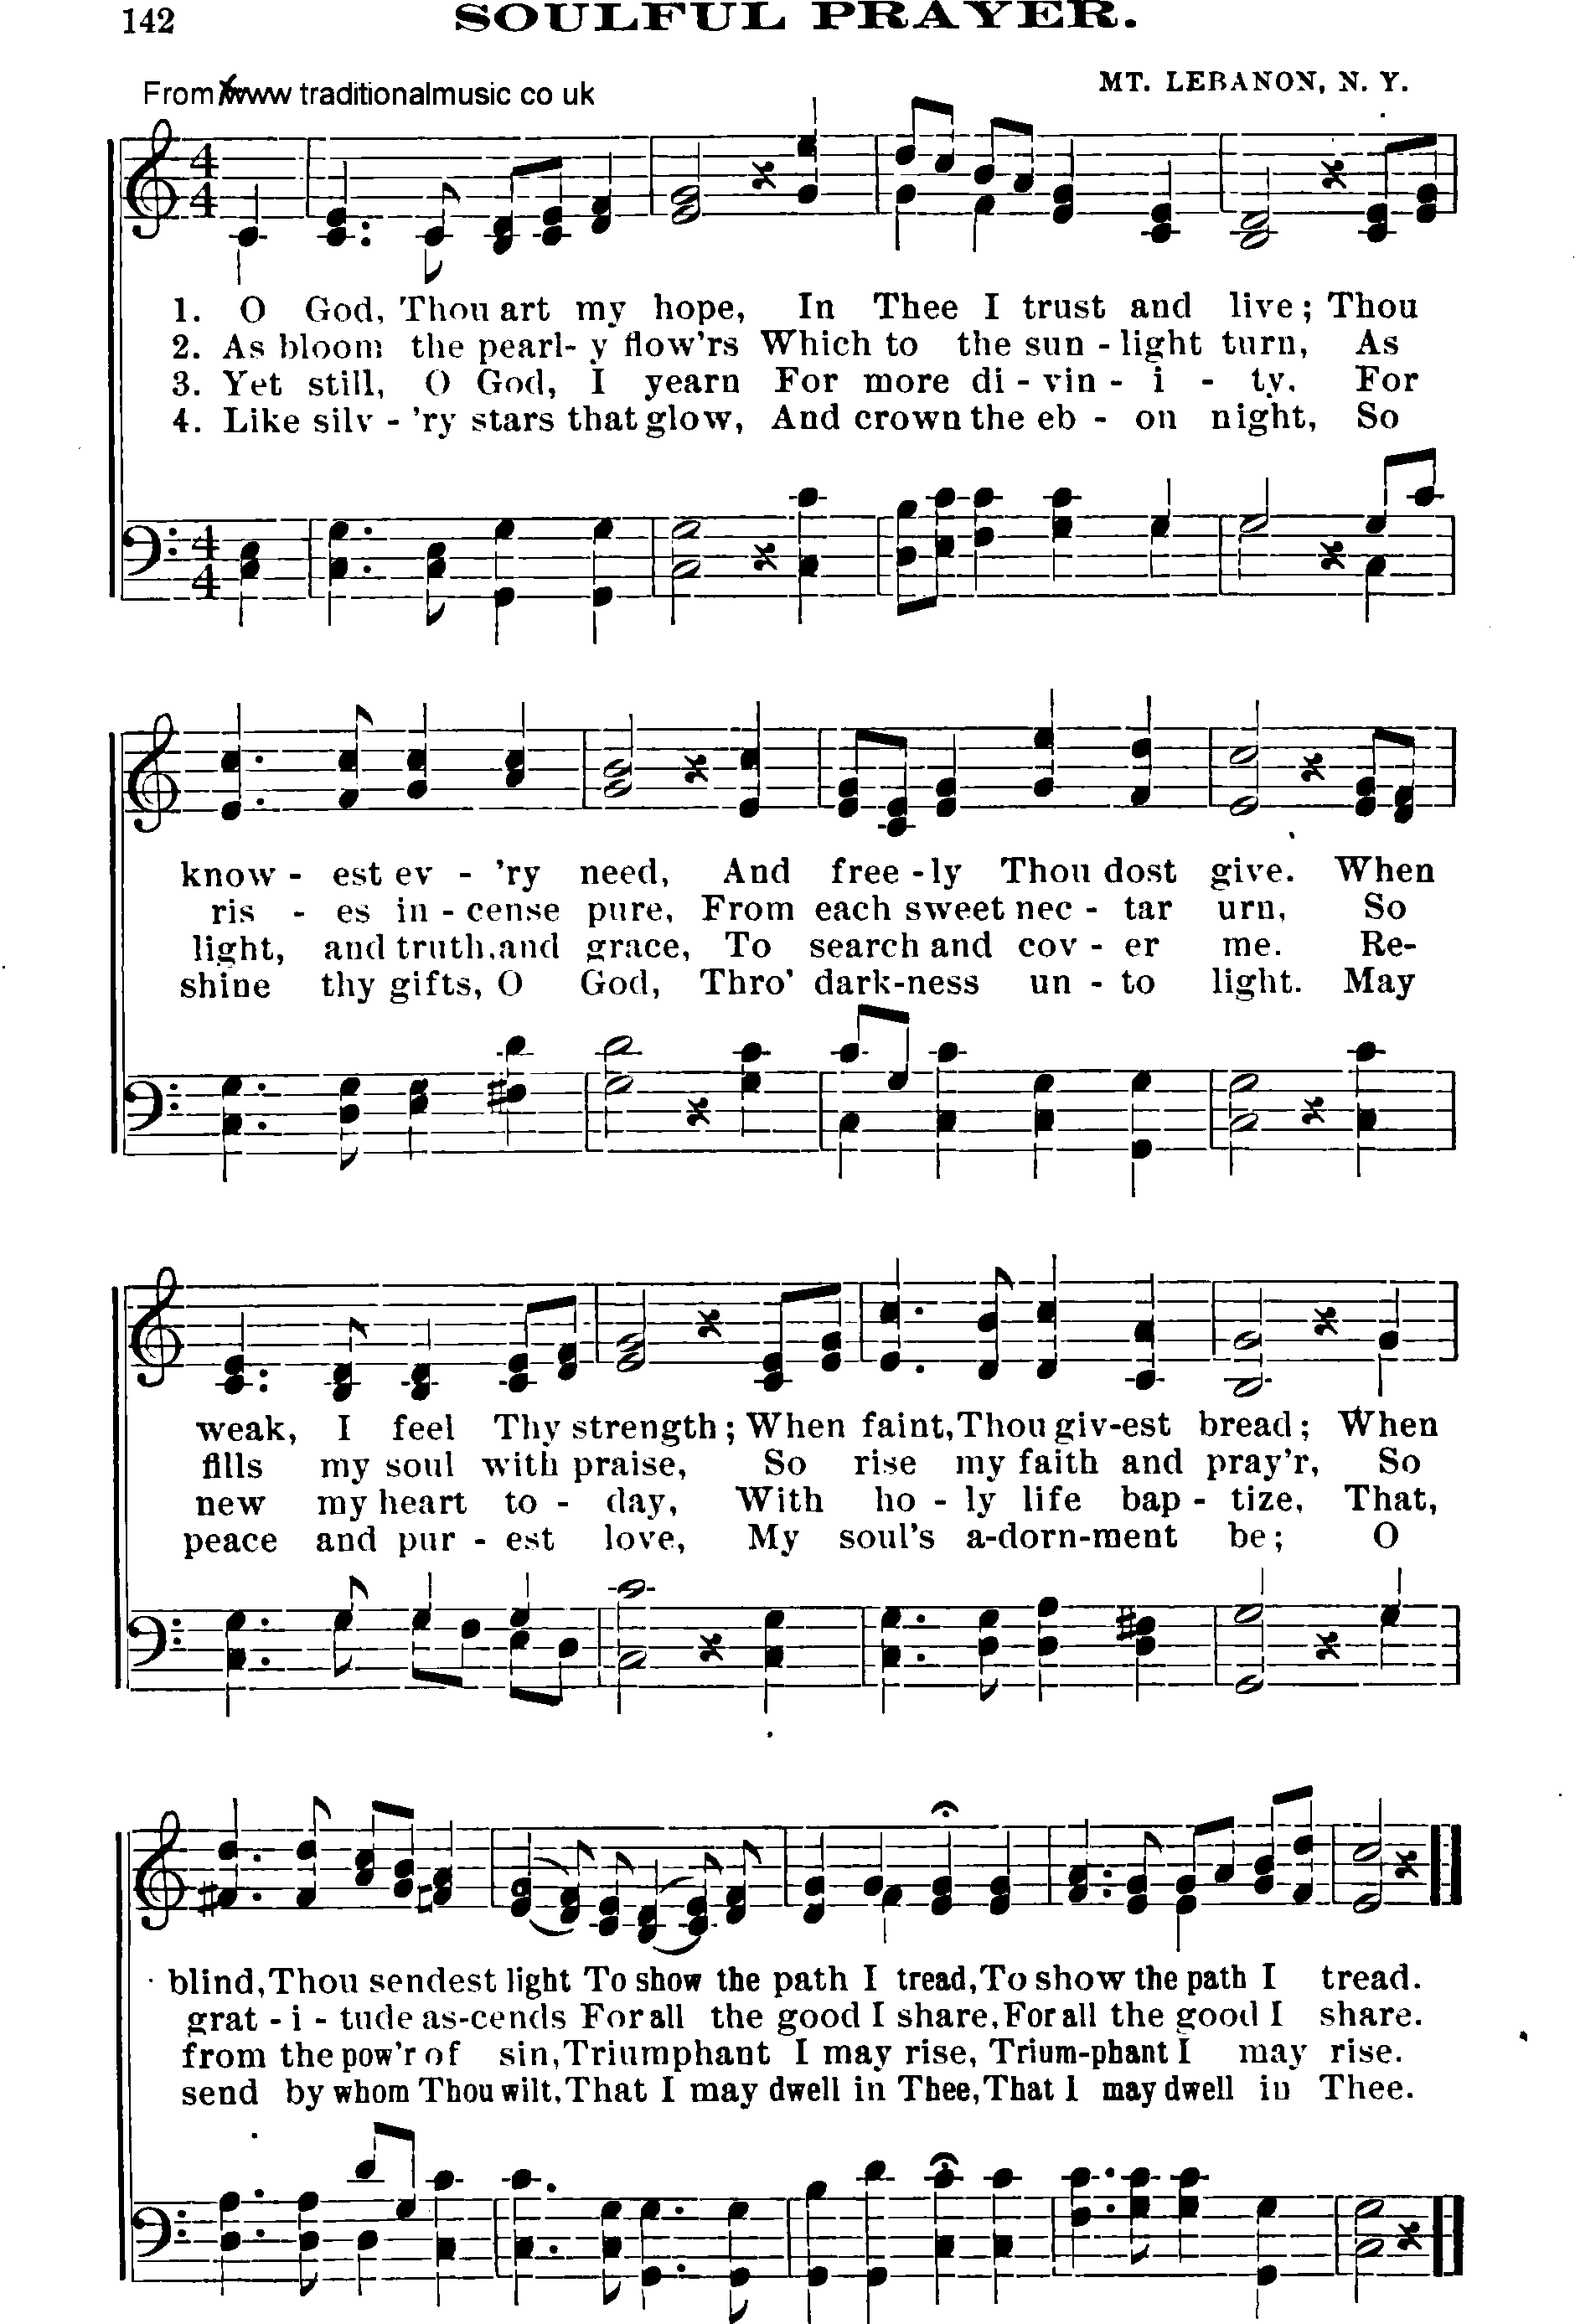 Shaker Music collection, Hymn: soulful prayer, sheetmusic and PDF